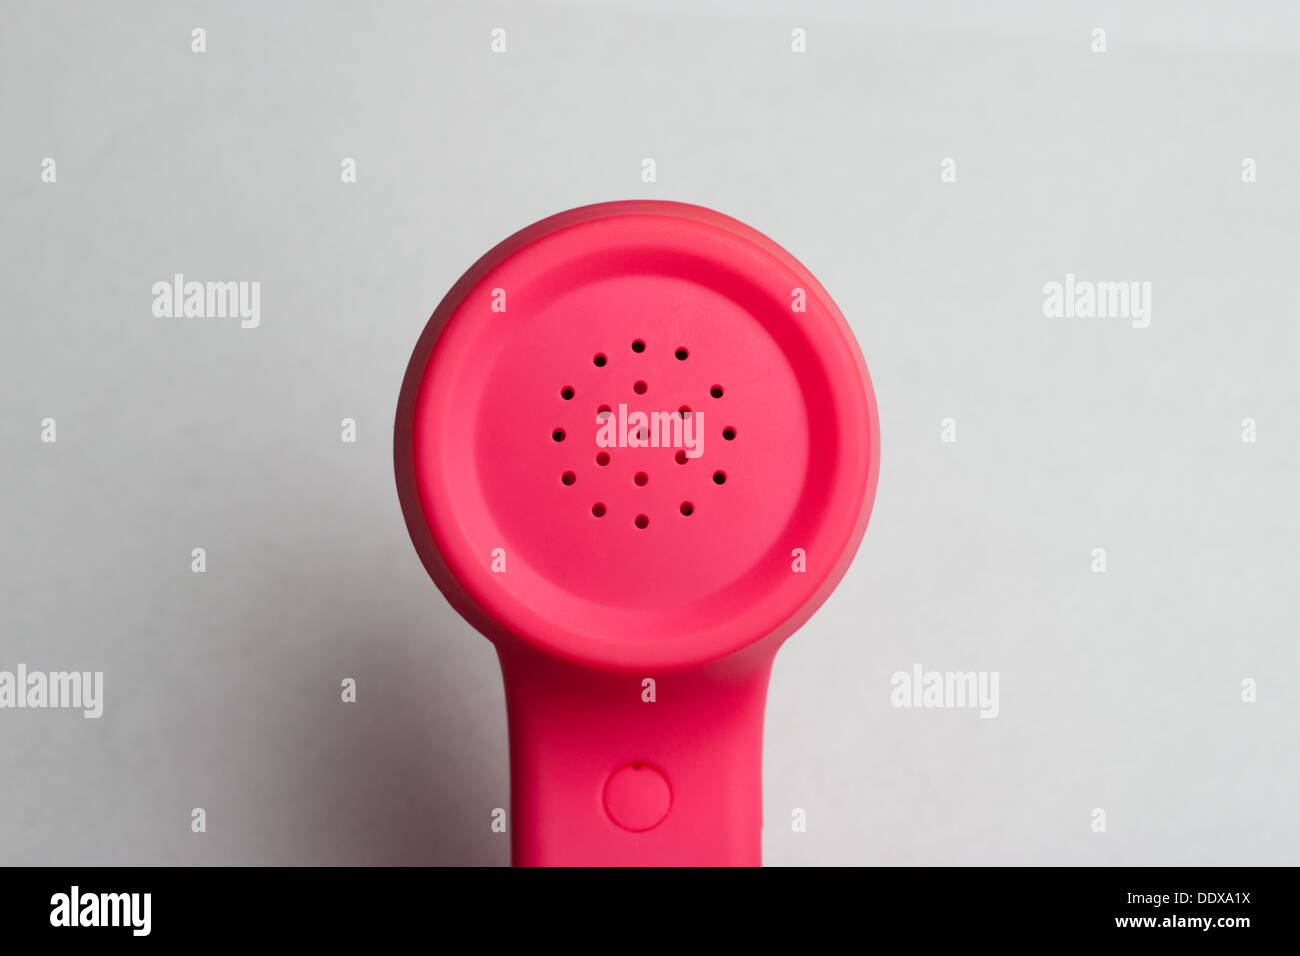 Pink phone speaker against white background Stock Photo